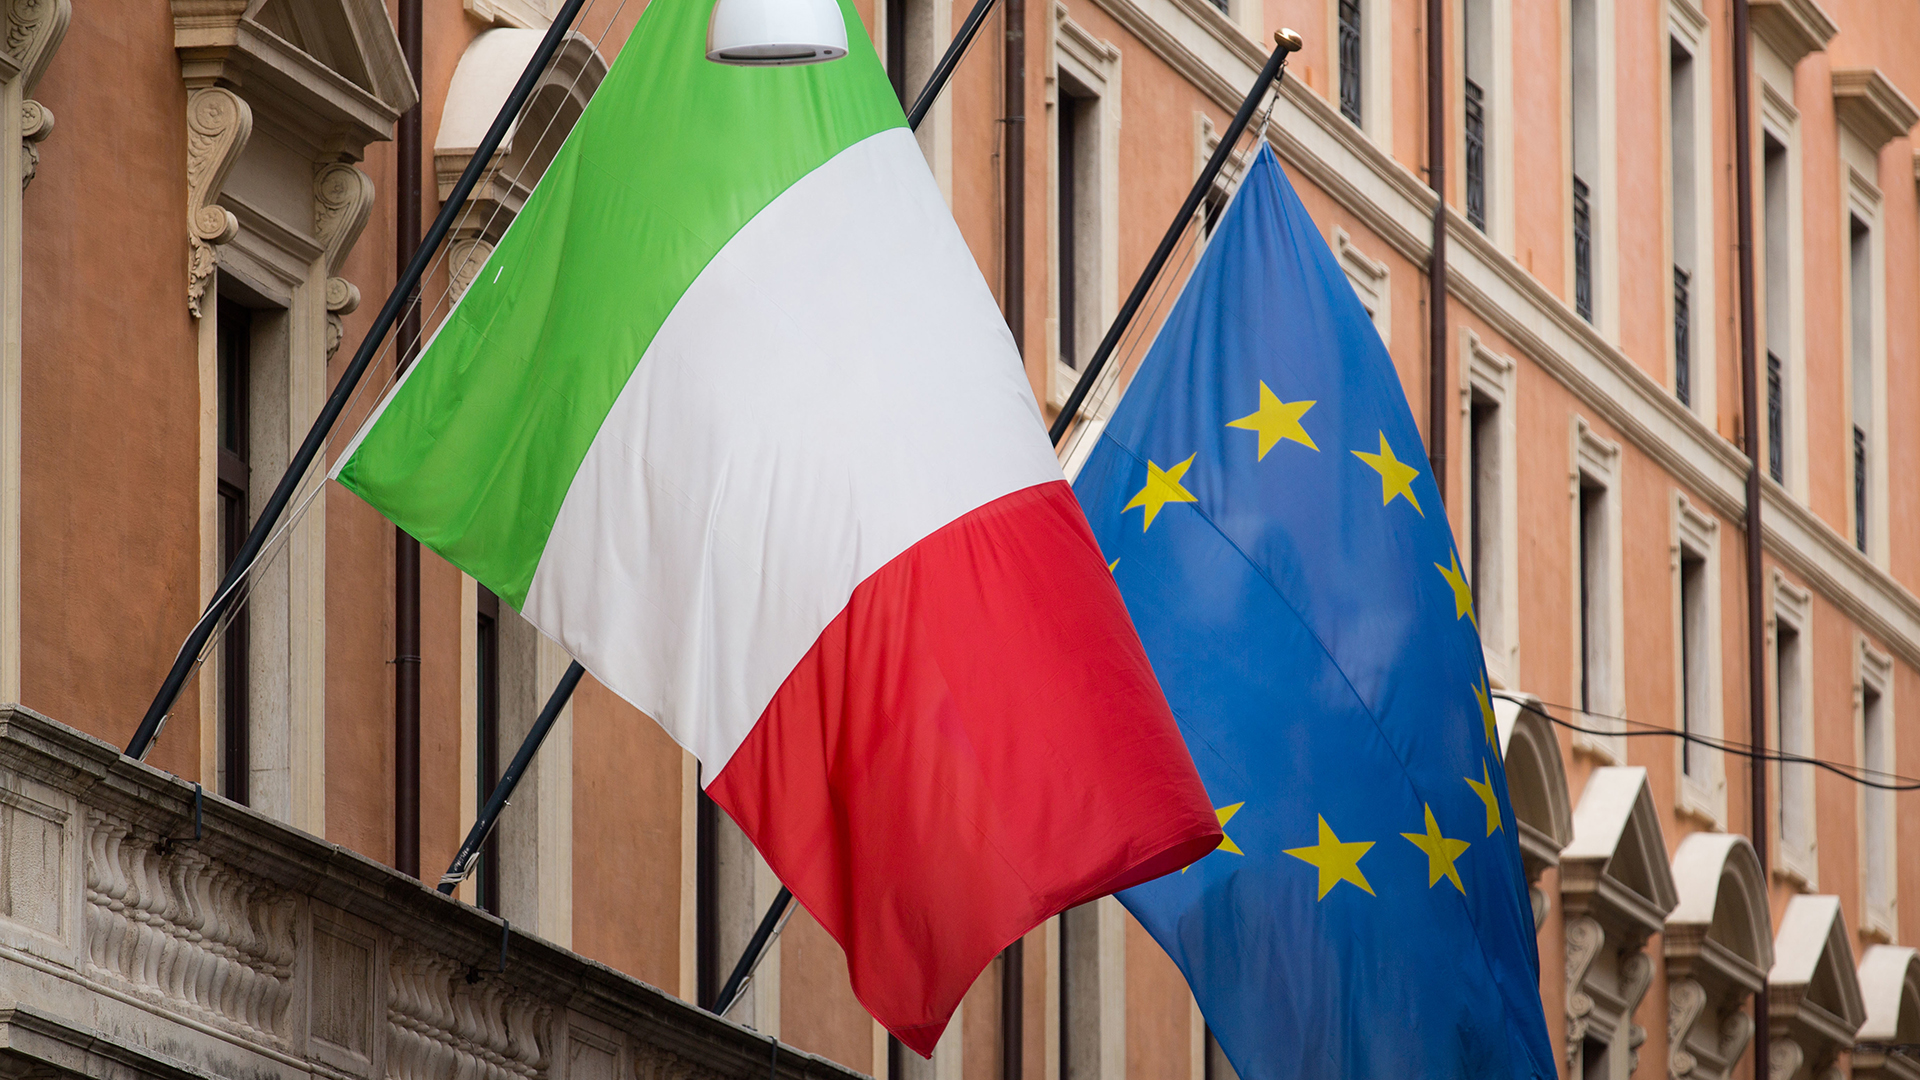 Flagge Italiens und der EU | picture alliance / dpa